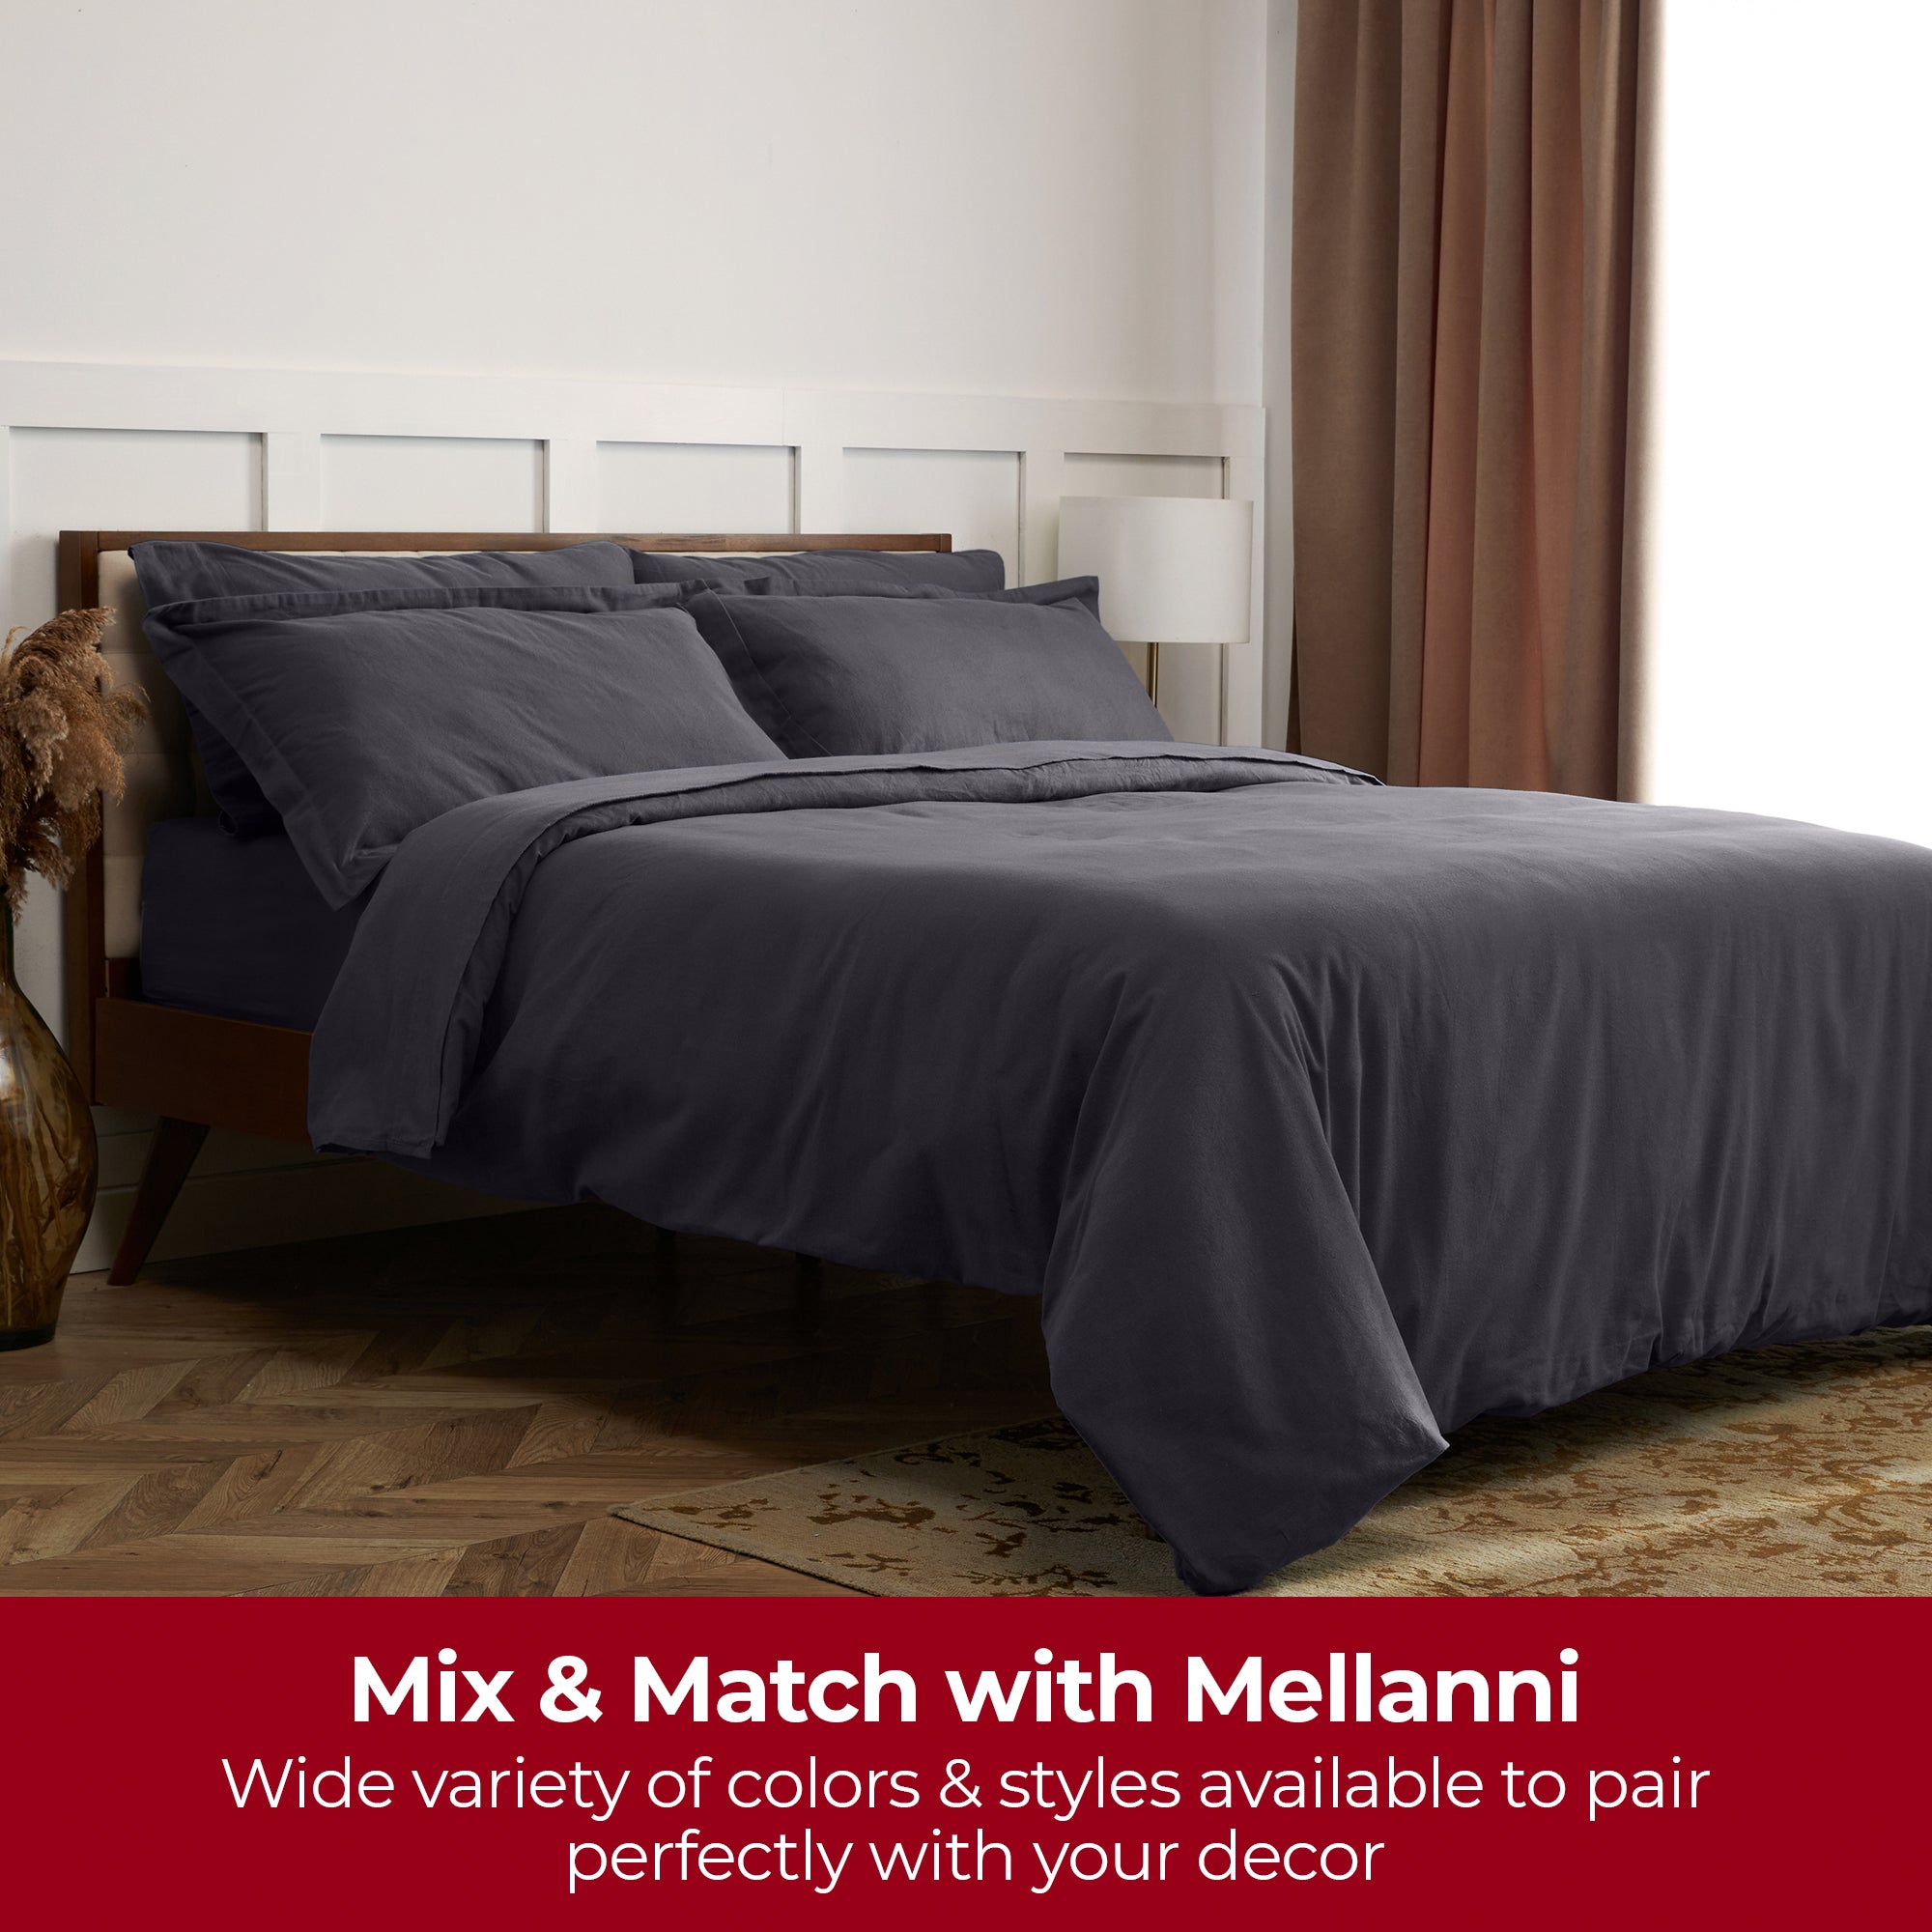 Mellanni Cotton Flannel 4 Piece Sheet Set, Lightweight Deep Pocket Bed Sheets, Queen, Gray - image 5 of 6